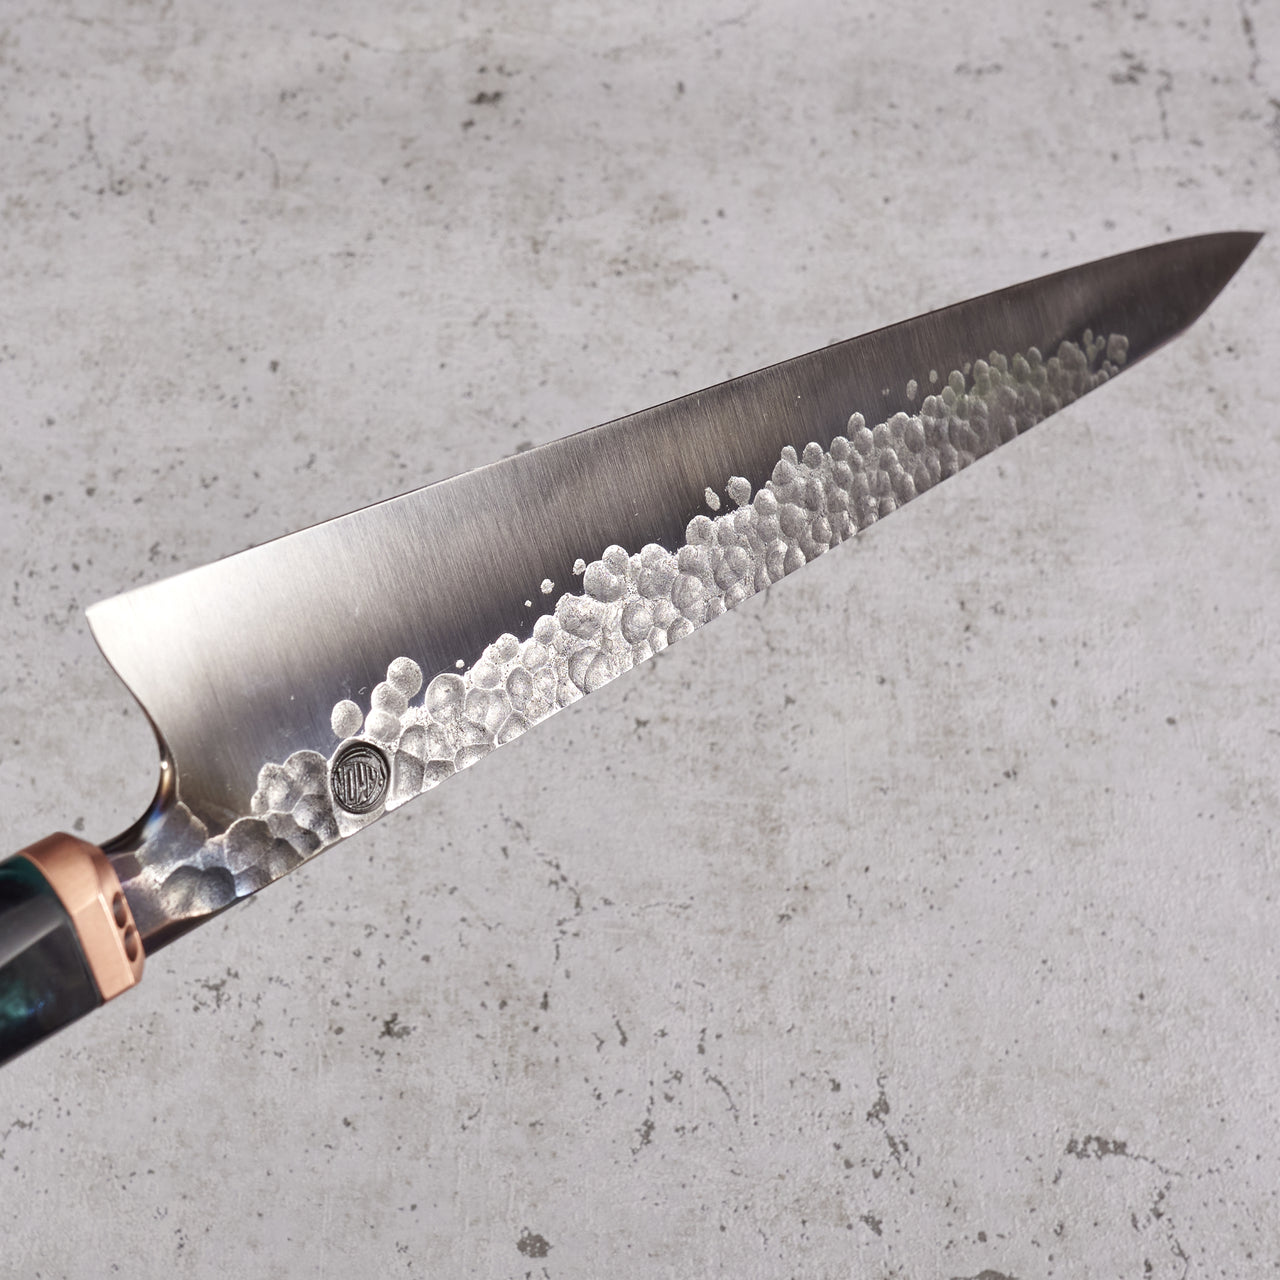 Kamon Knives Sujihiki 340mm Denty Kurouchi 1.2519 - Profile